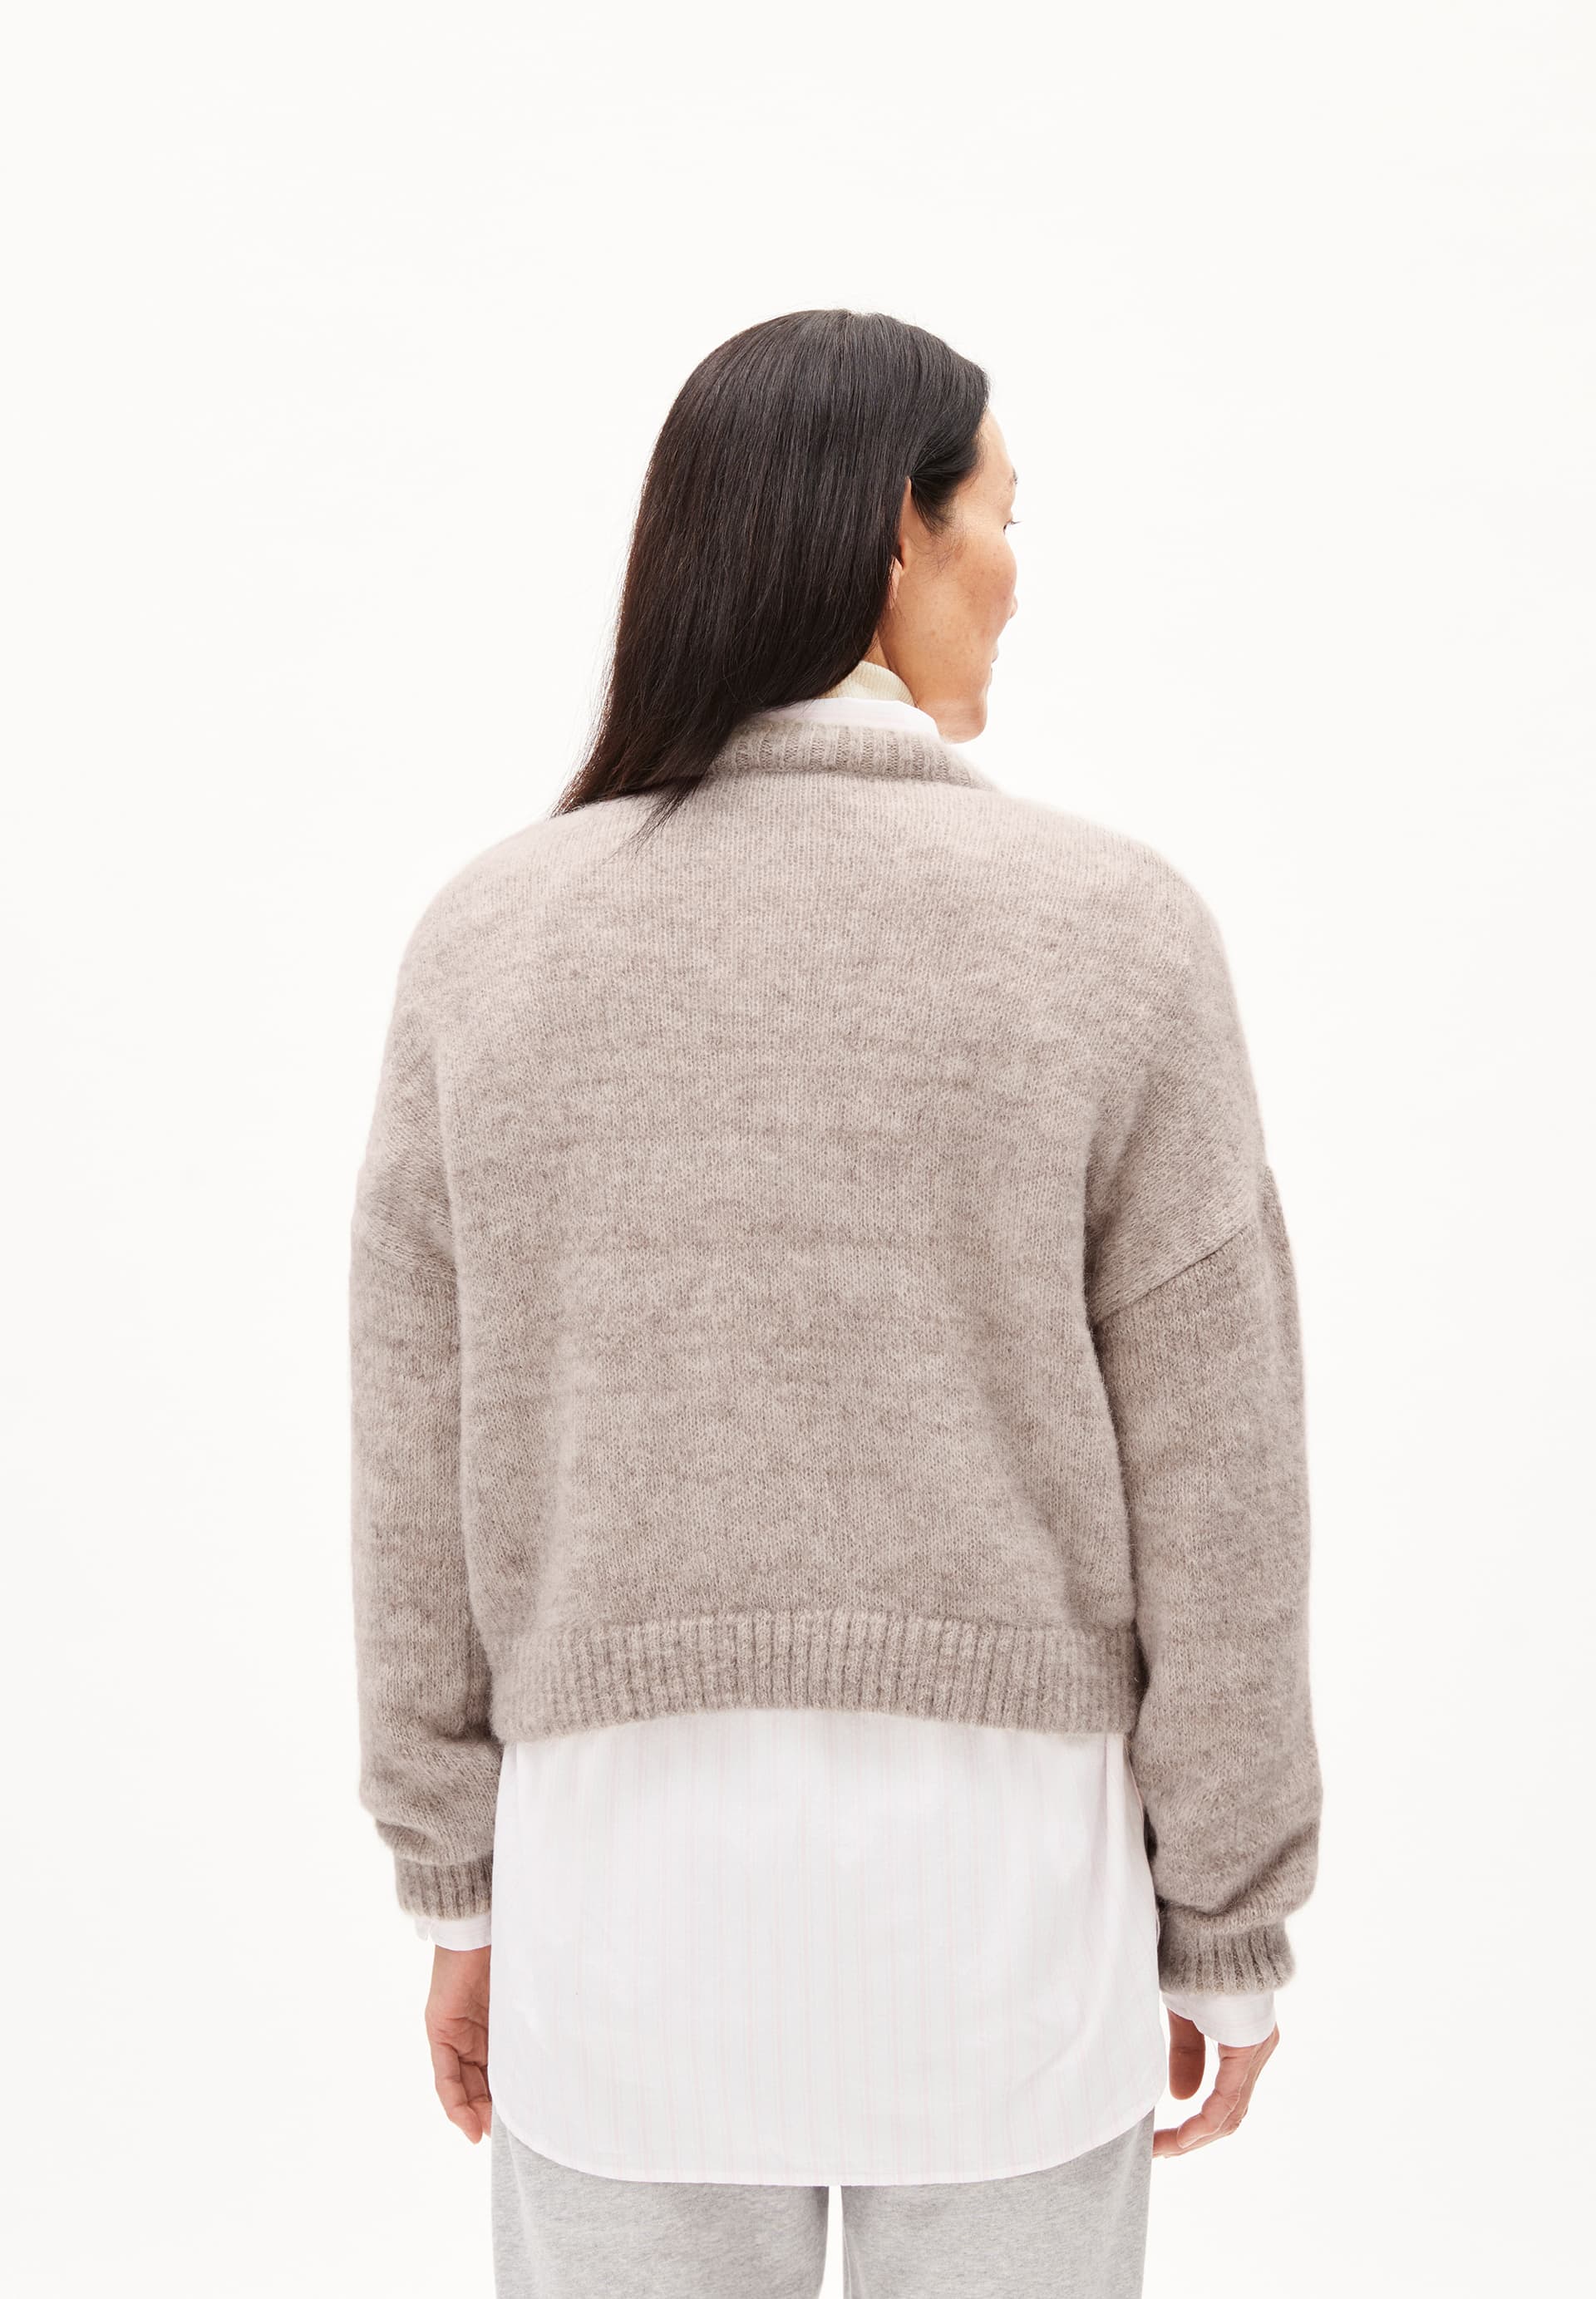 SURI INARAA Sweater Oversized Fit made of Alpaca Wool Mix